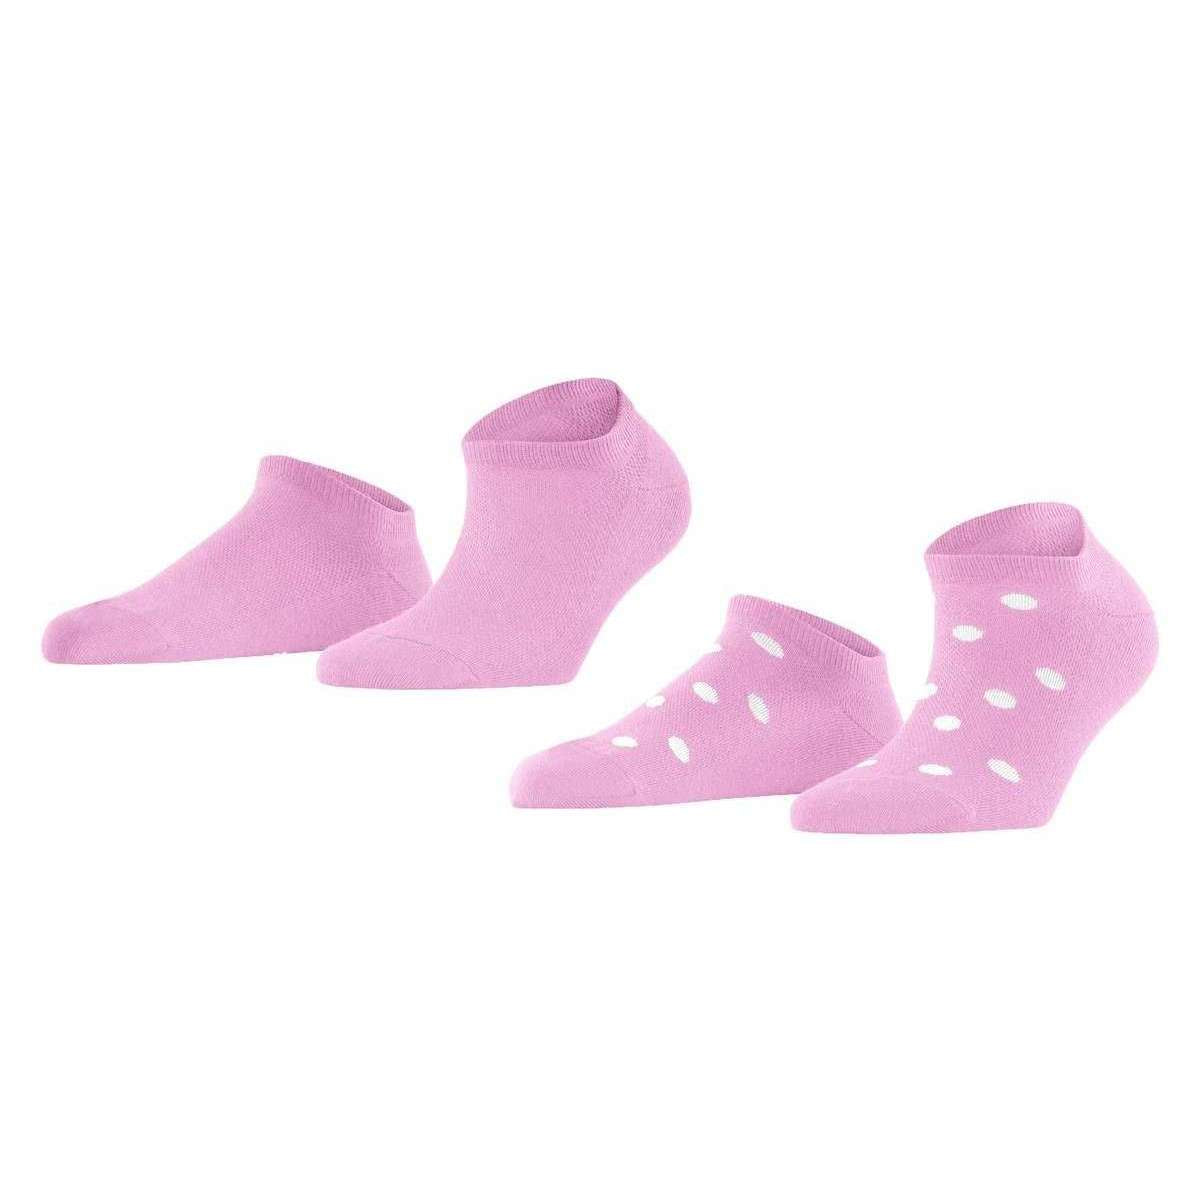 Esprit Mesh Dot 2 Pack Sneaker Socks - Orchid Pink